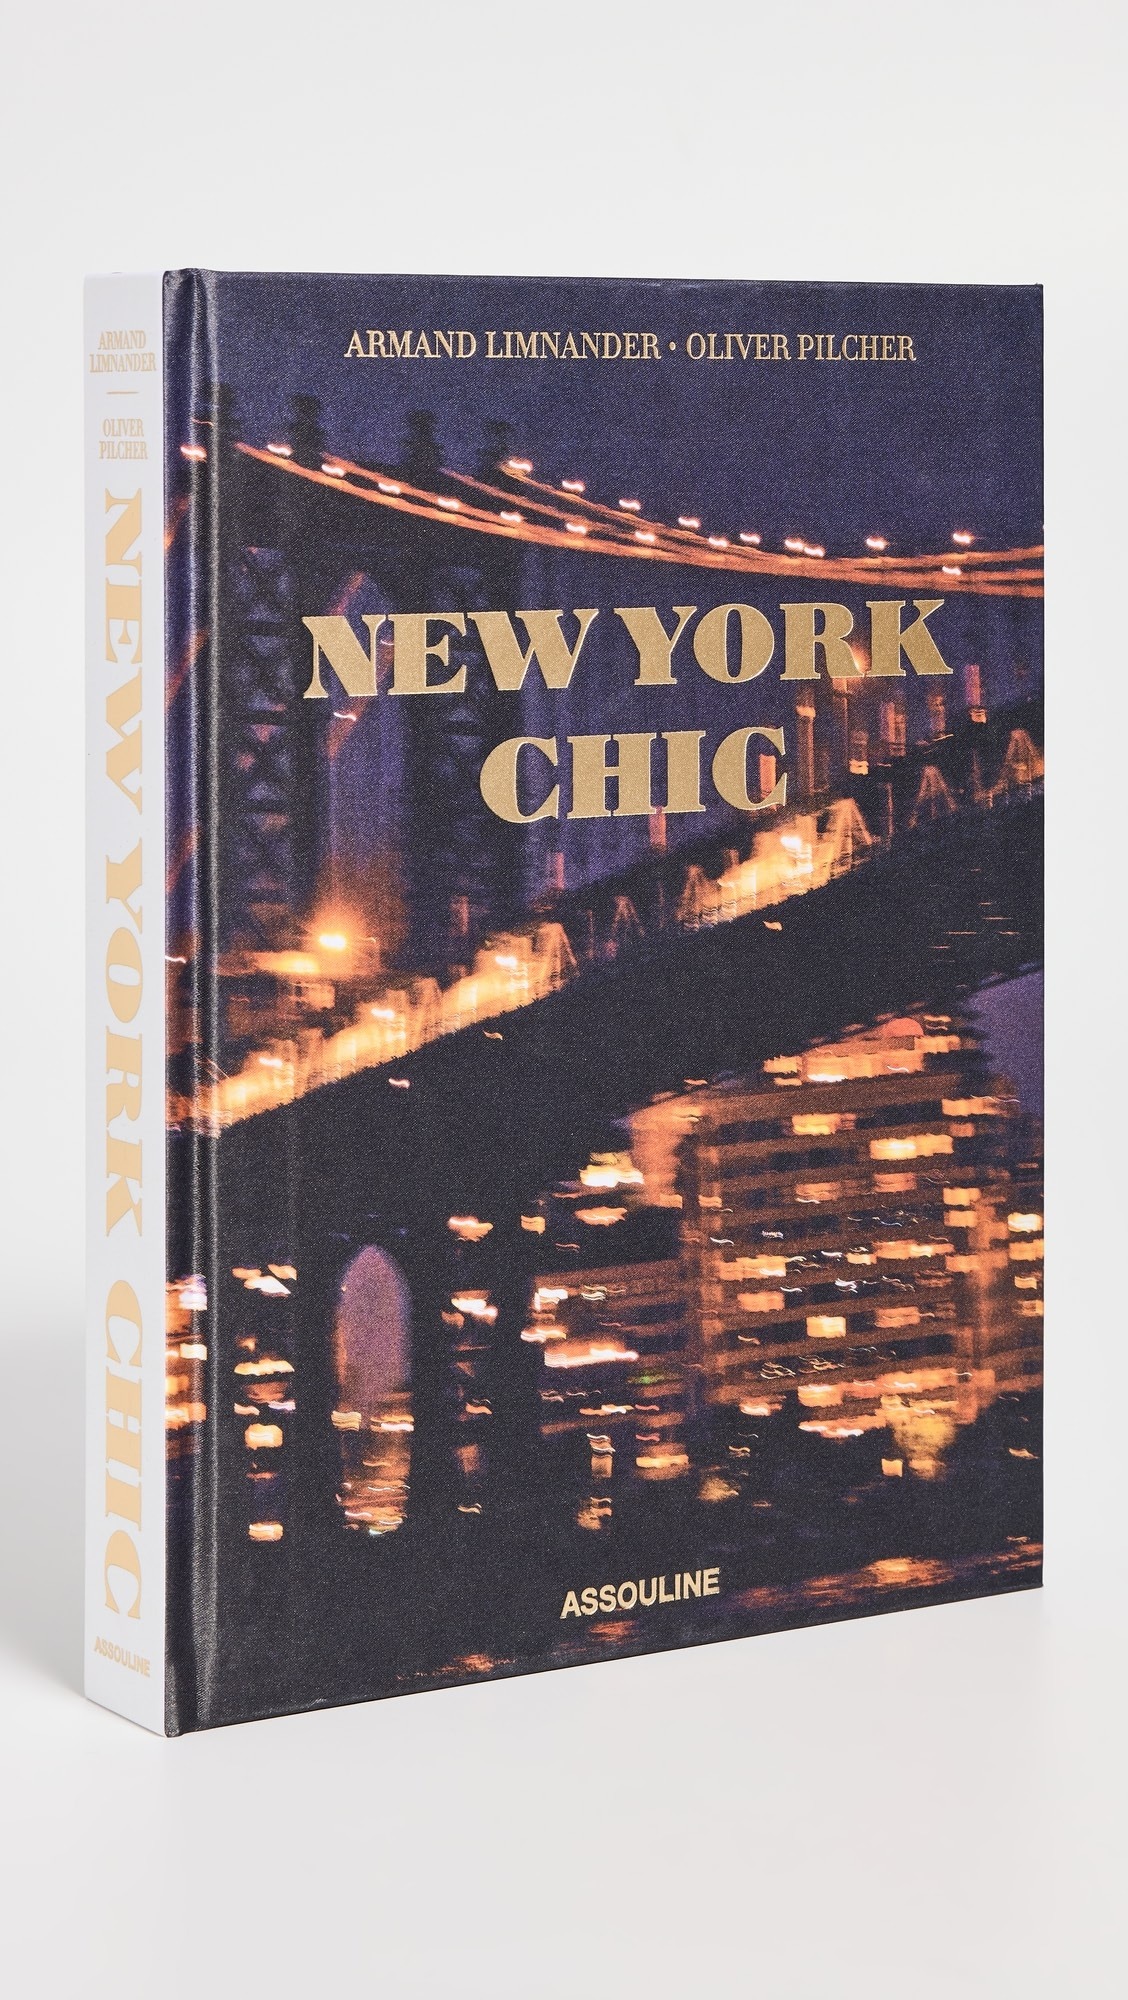 Assouline New York Chic book